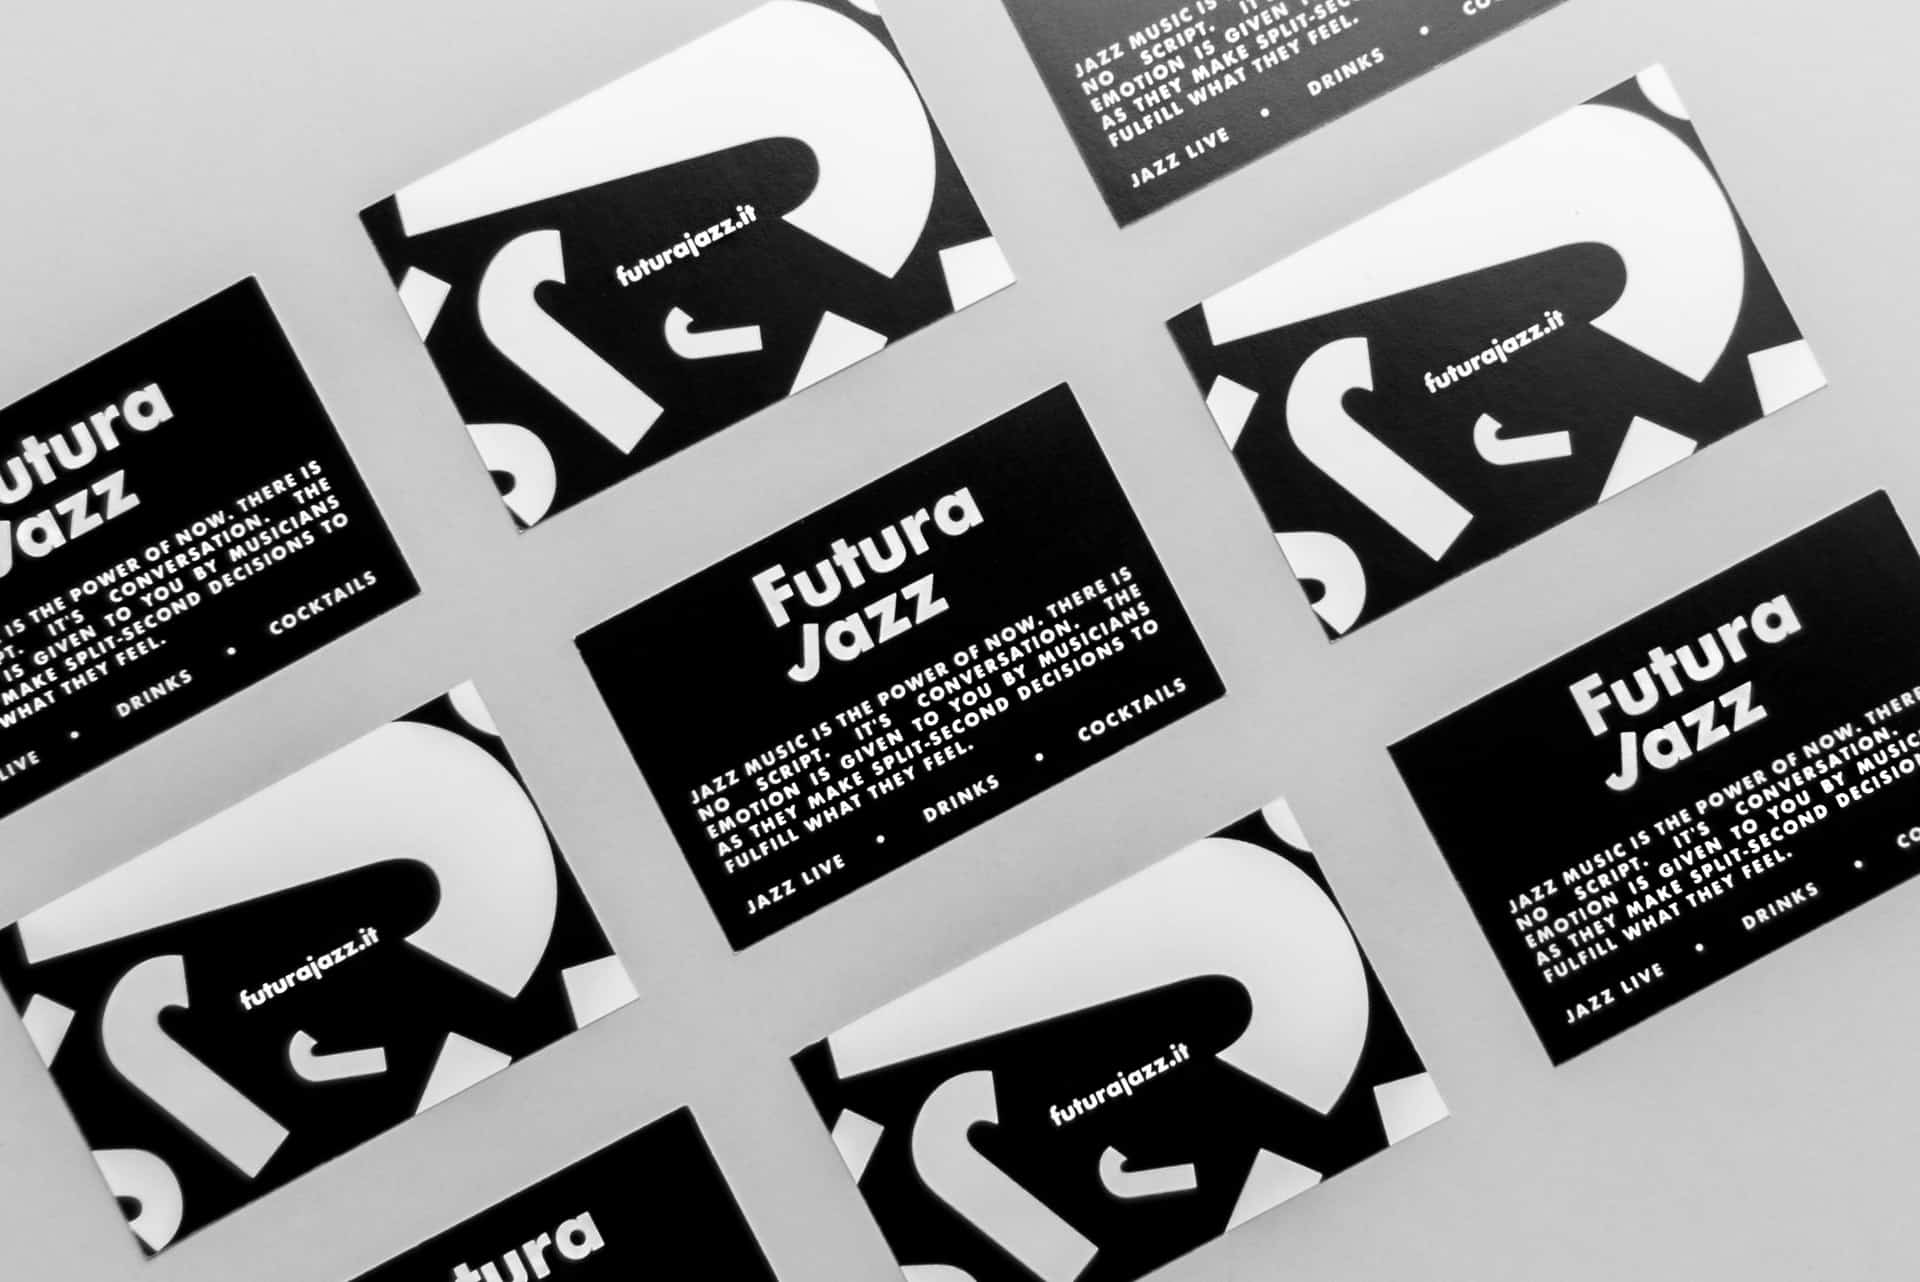 Futura Jazz Bar - Brand Identity